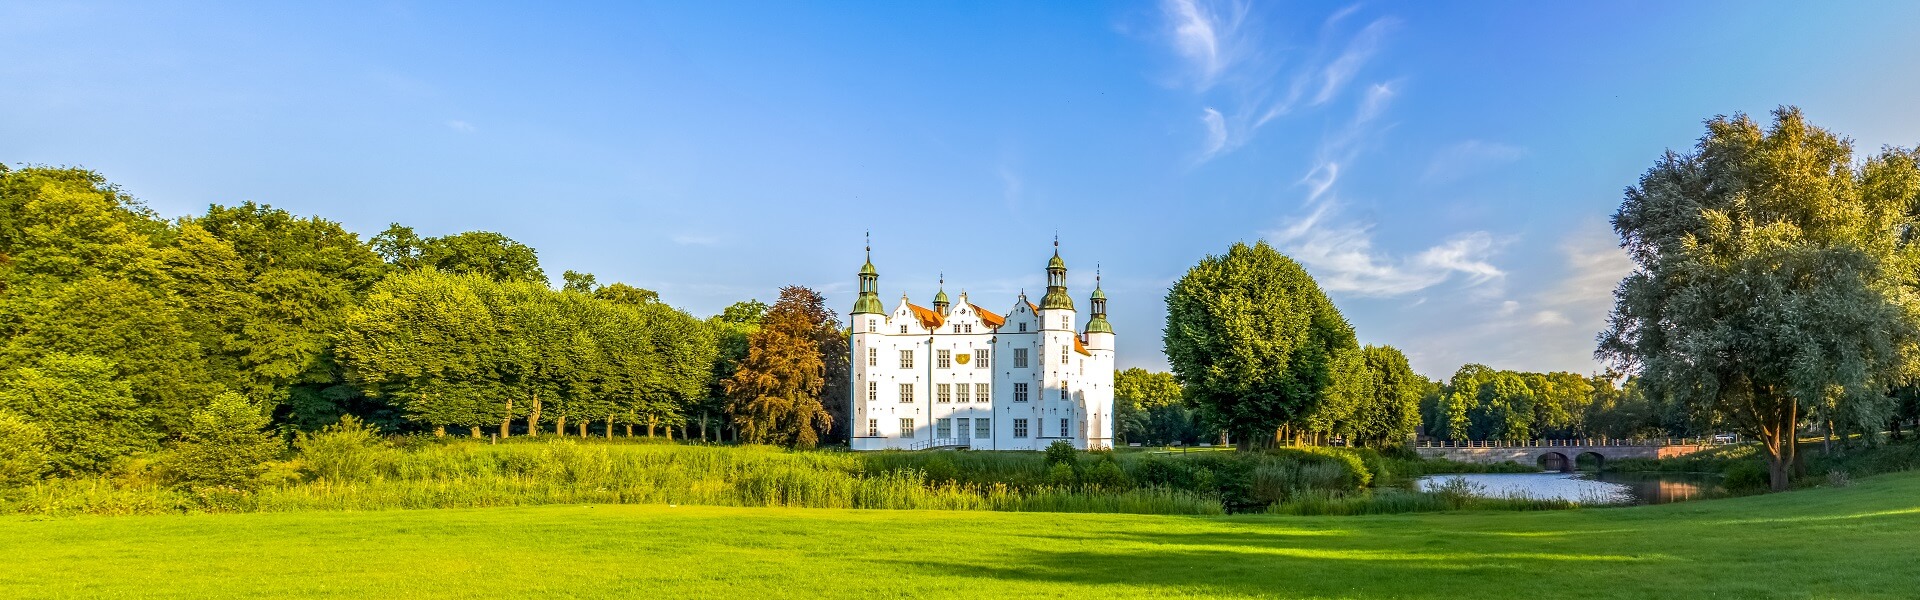 Blick auf Schloss Ahrensburg aus dem Schlosspark